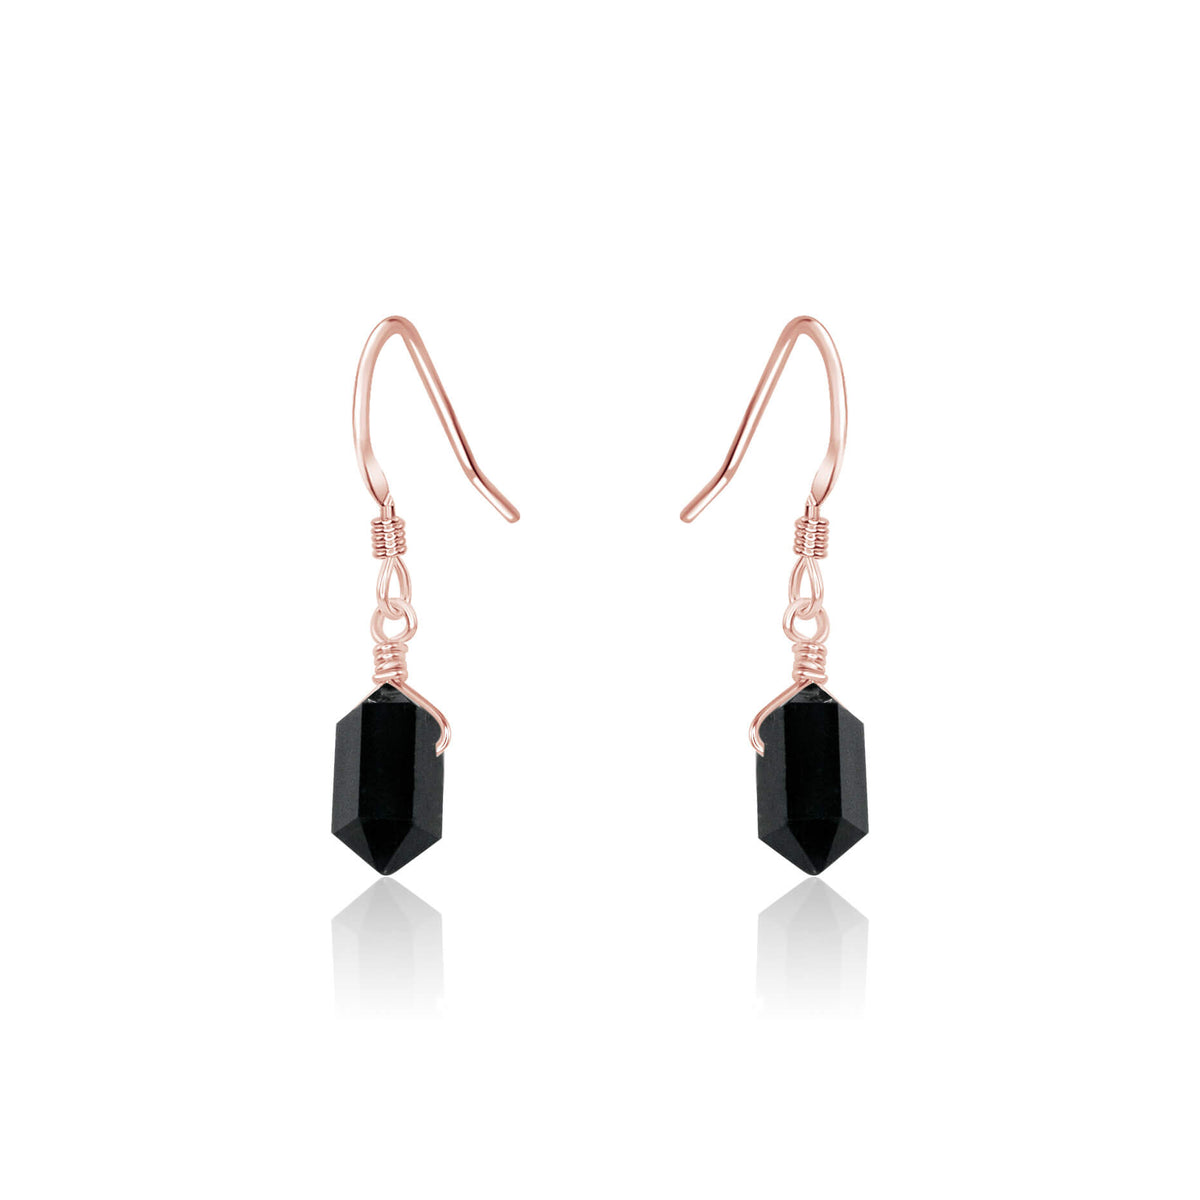 Double Terminated Crystal Dangle Drop Earrings - Black Tourmaline - 14K Rose Gold Fill - Luna Tide Handmade Jewellery